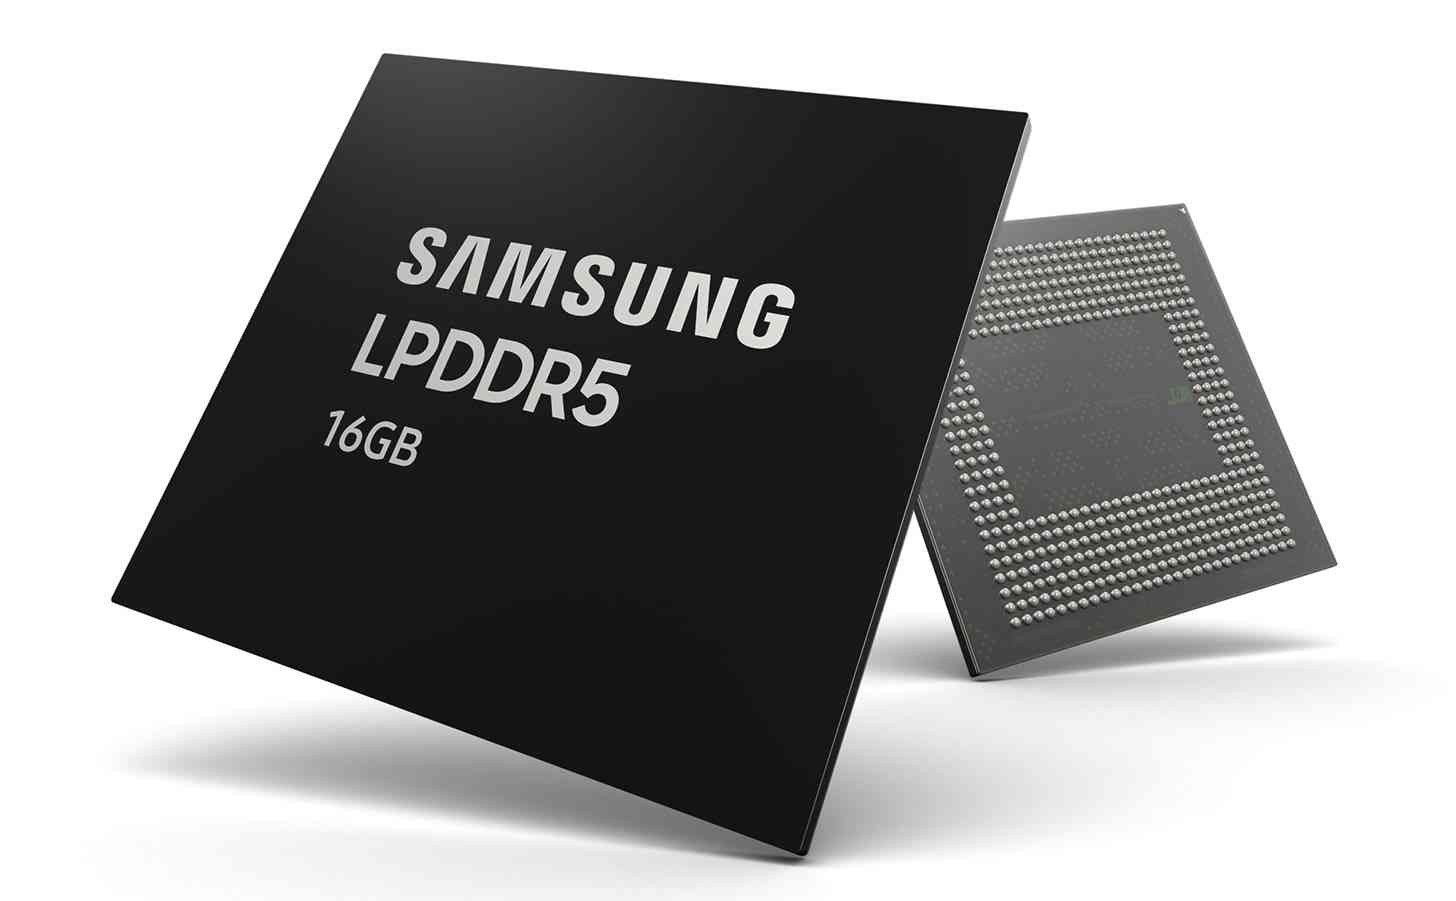 Samsung 16GB LPDDR5 RAM smartphones